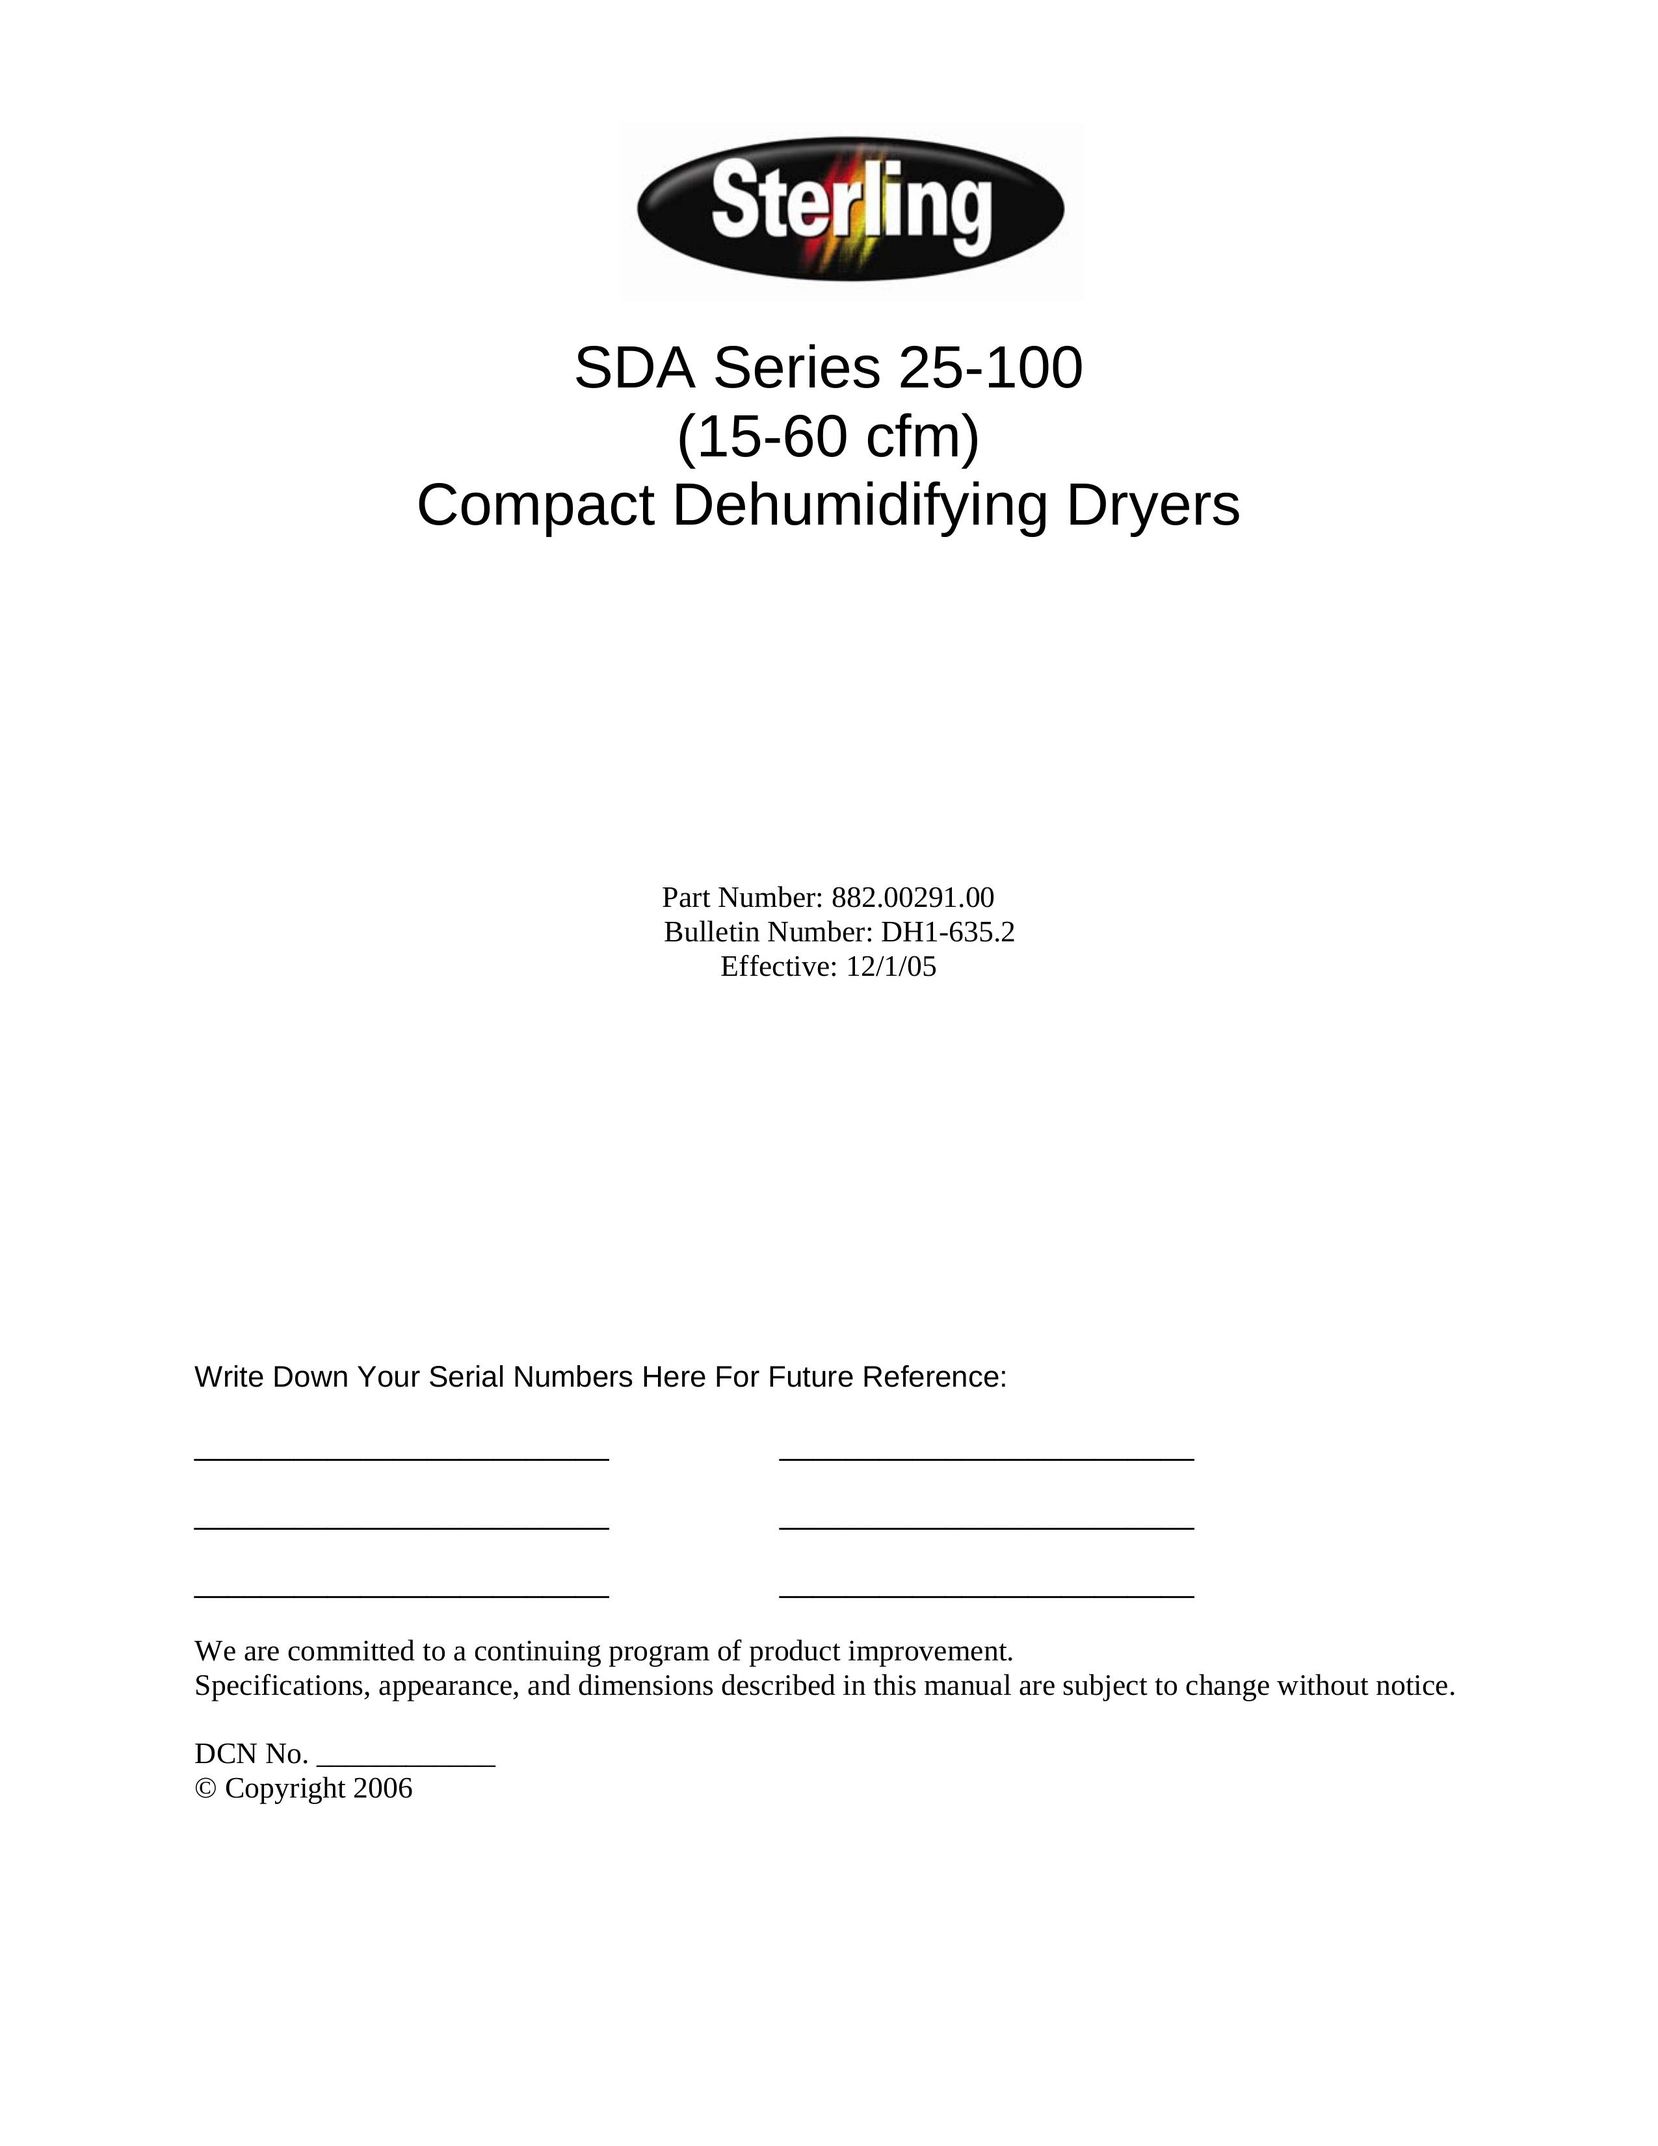 Sterling SDA Series 25-100 Dehumidifier User Manual